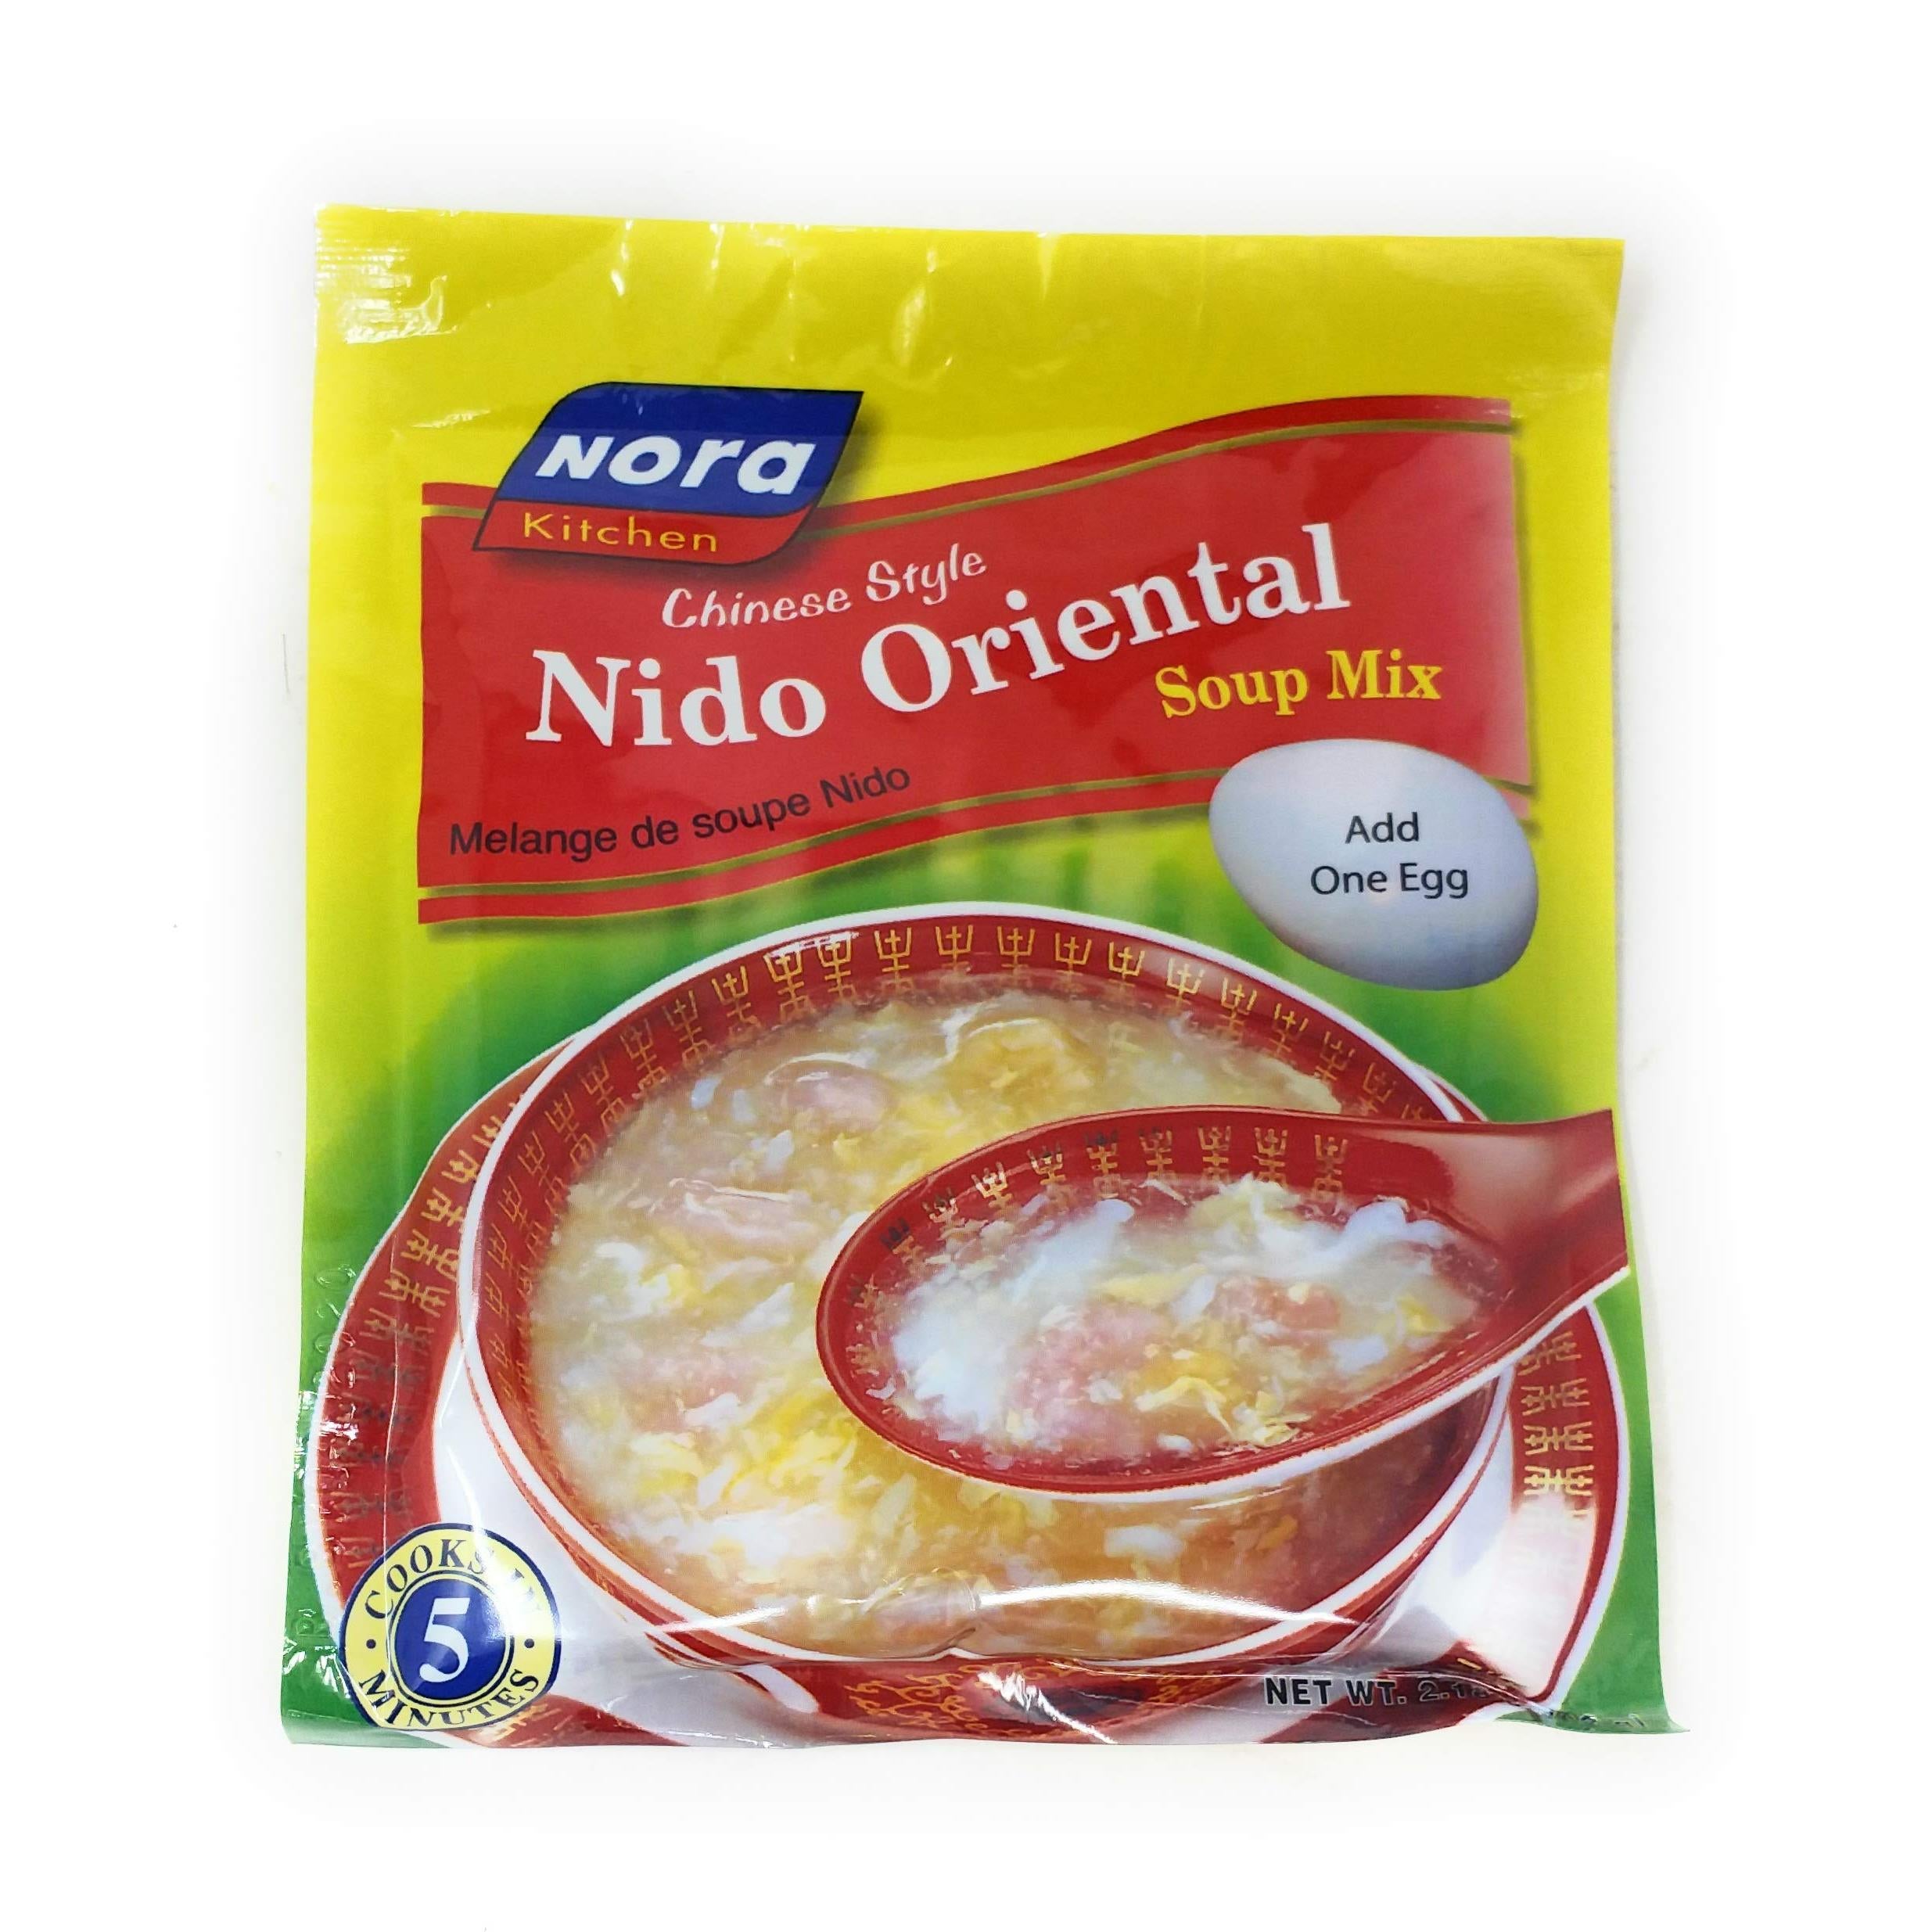 Nora Kitchen - Chinese Style Nido Oriental Soup Mix, 2.18oz (62g)